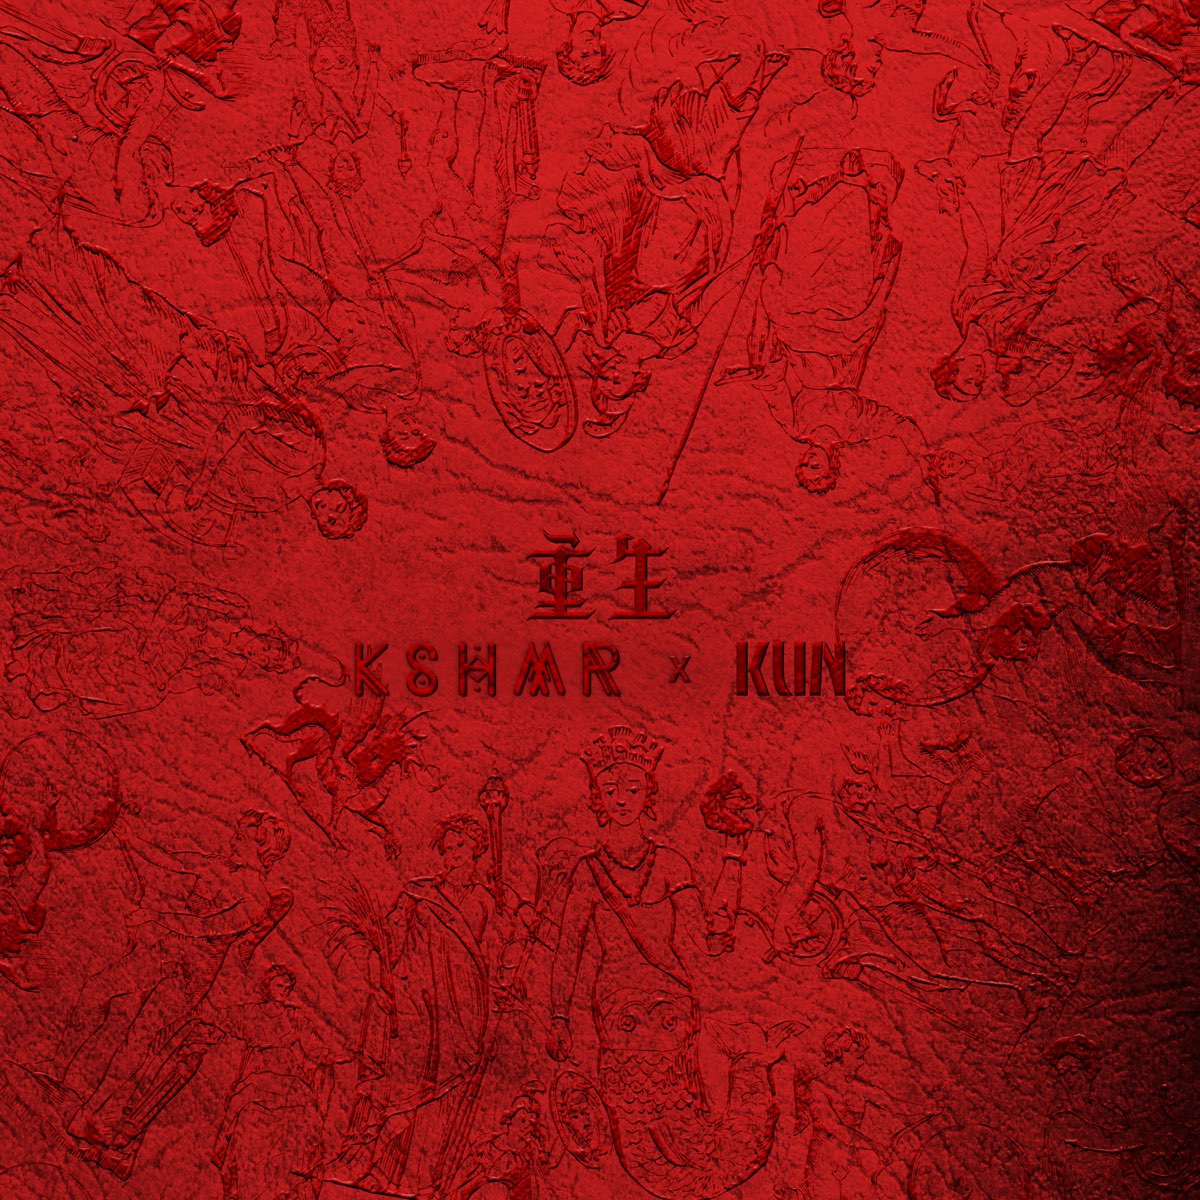 Kshmr Logo Wallpapers